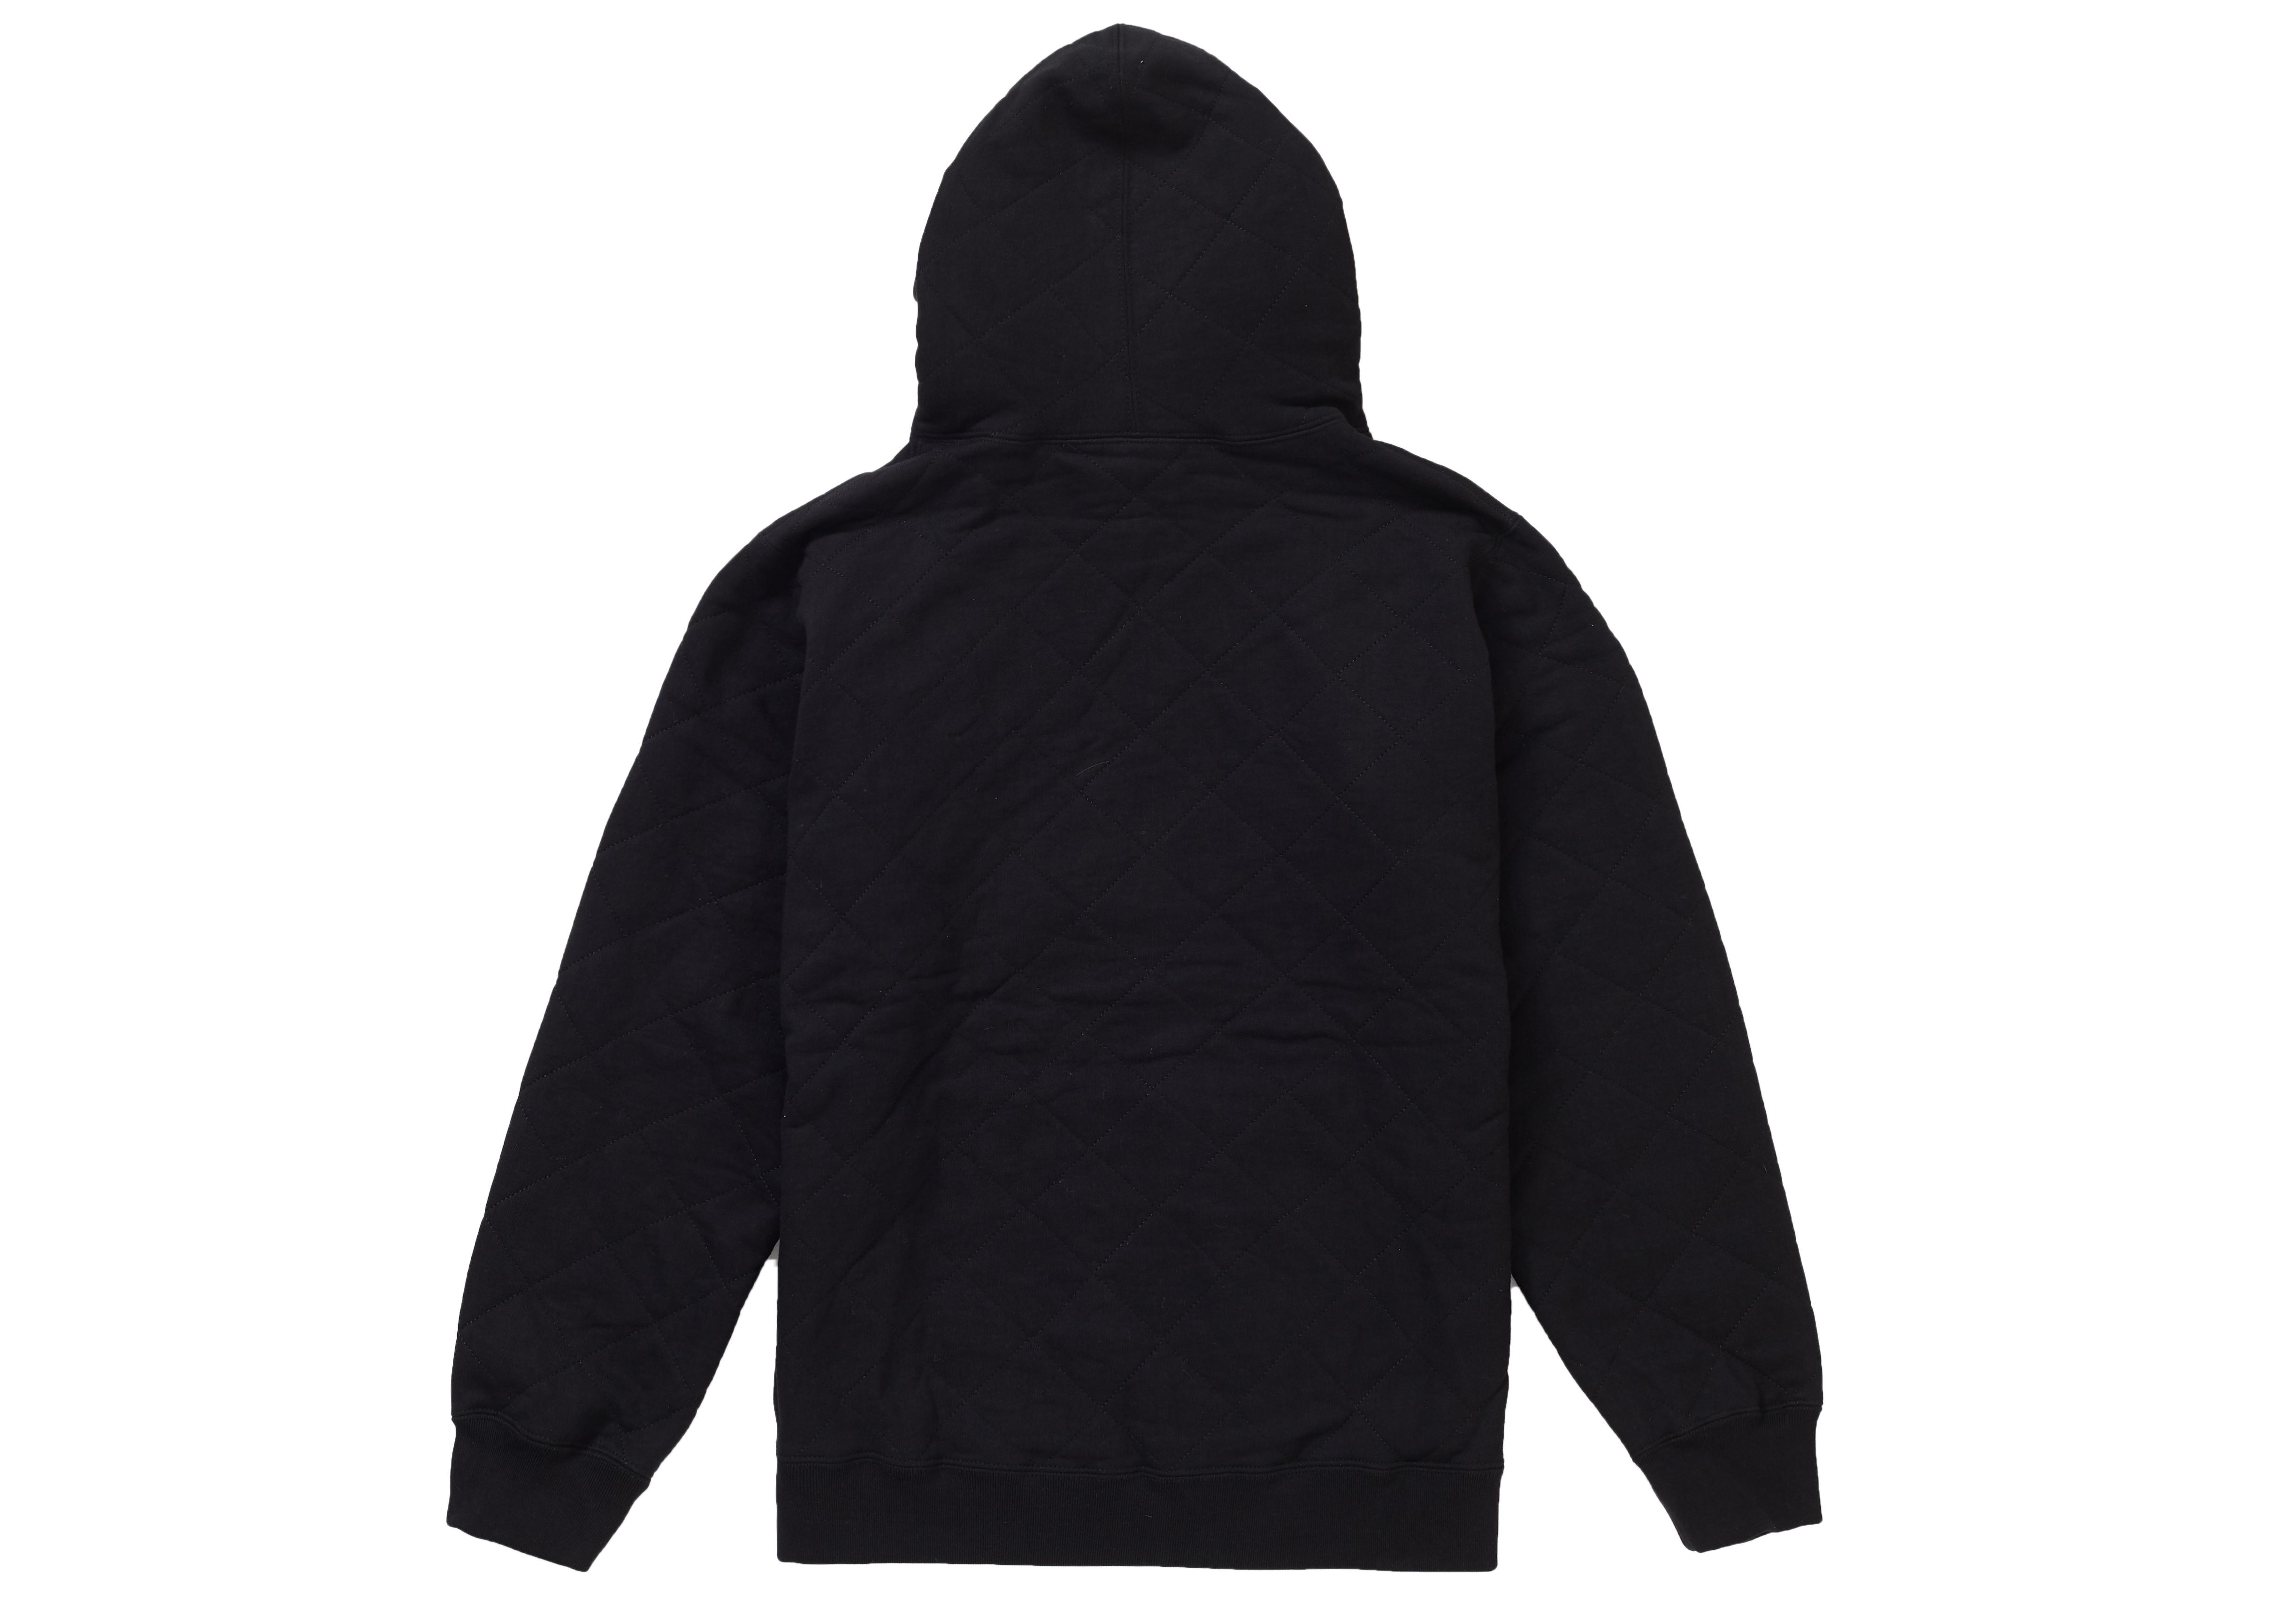 Lyst - Supreme Quilted Hooded Sweatshirt Black in Black for Men